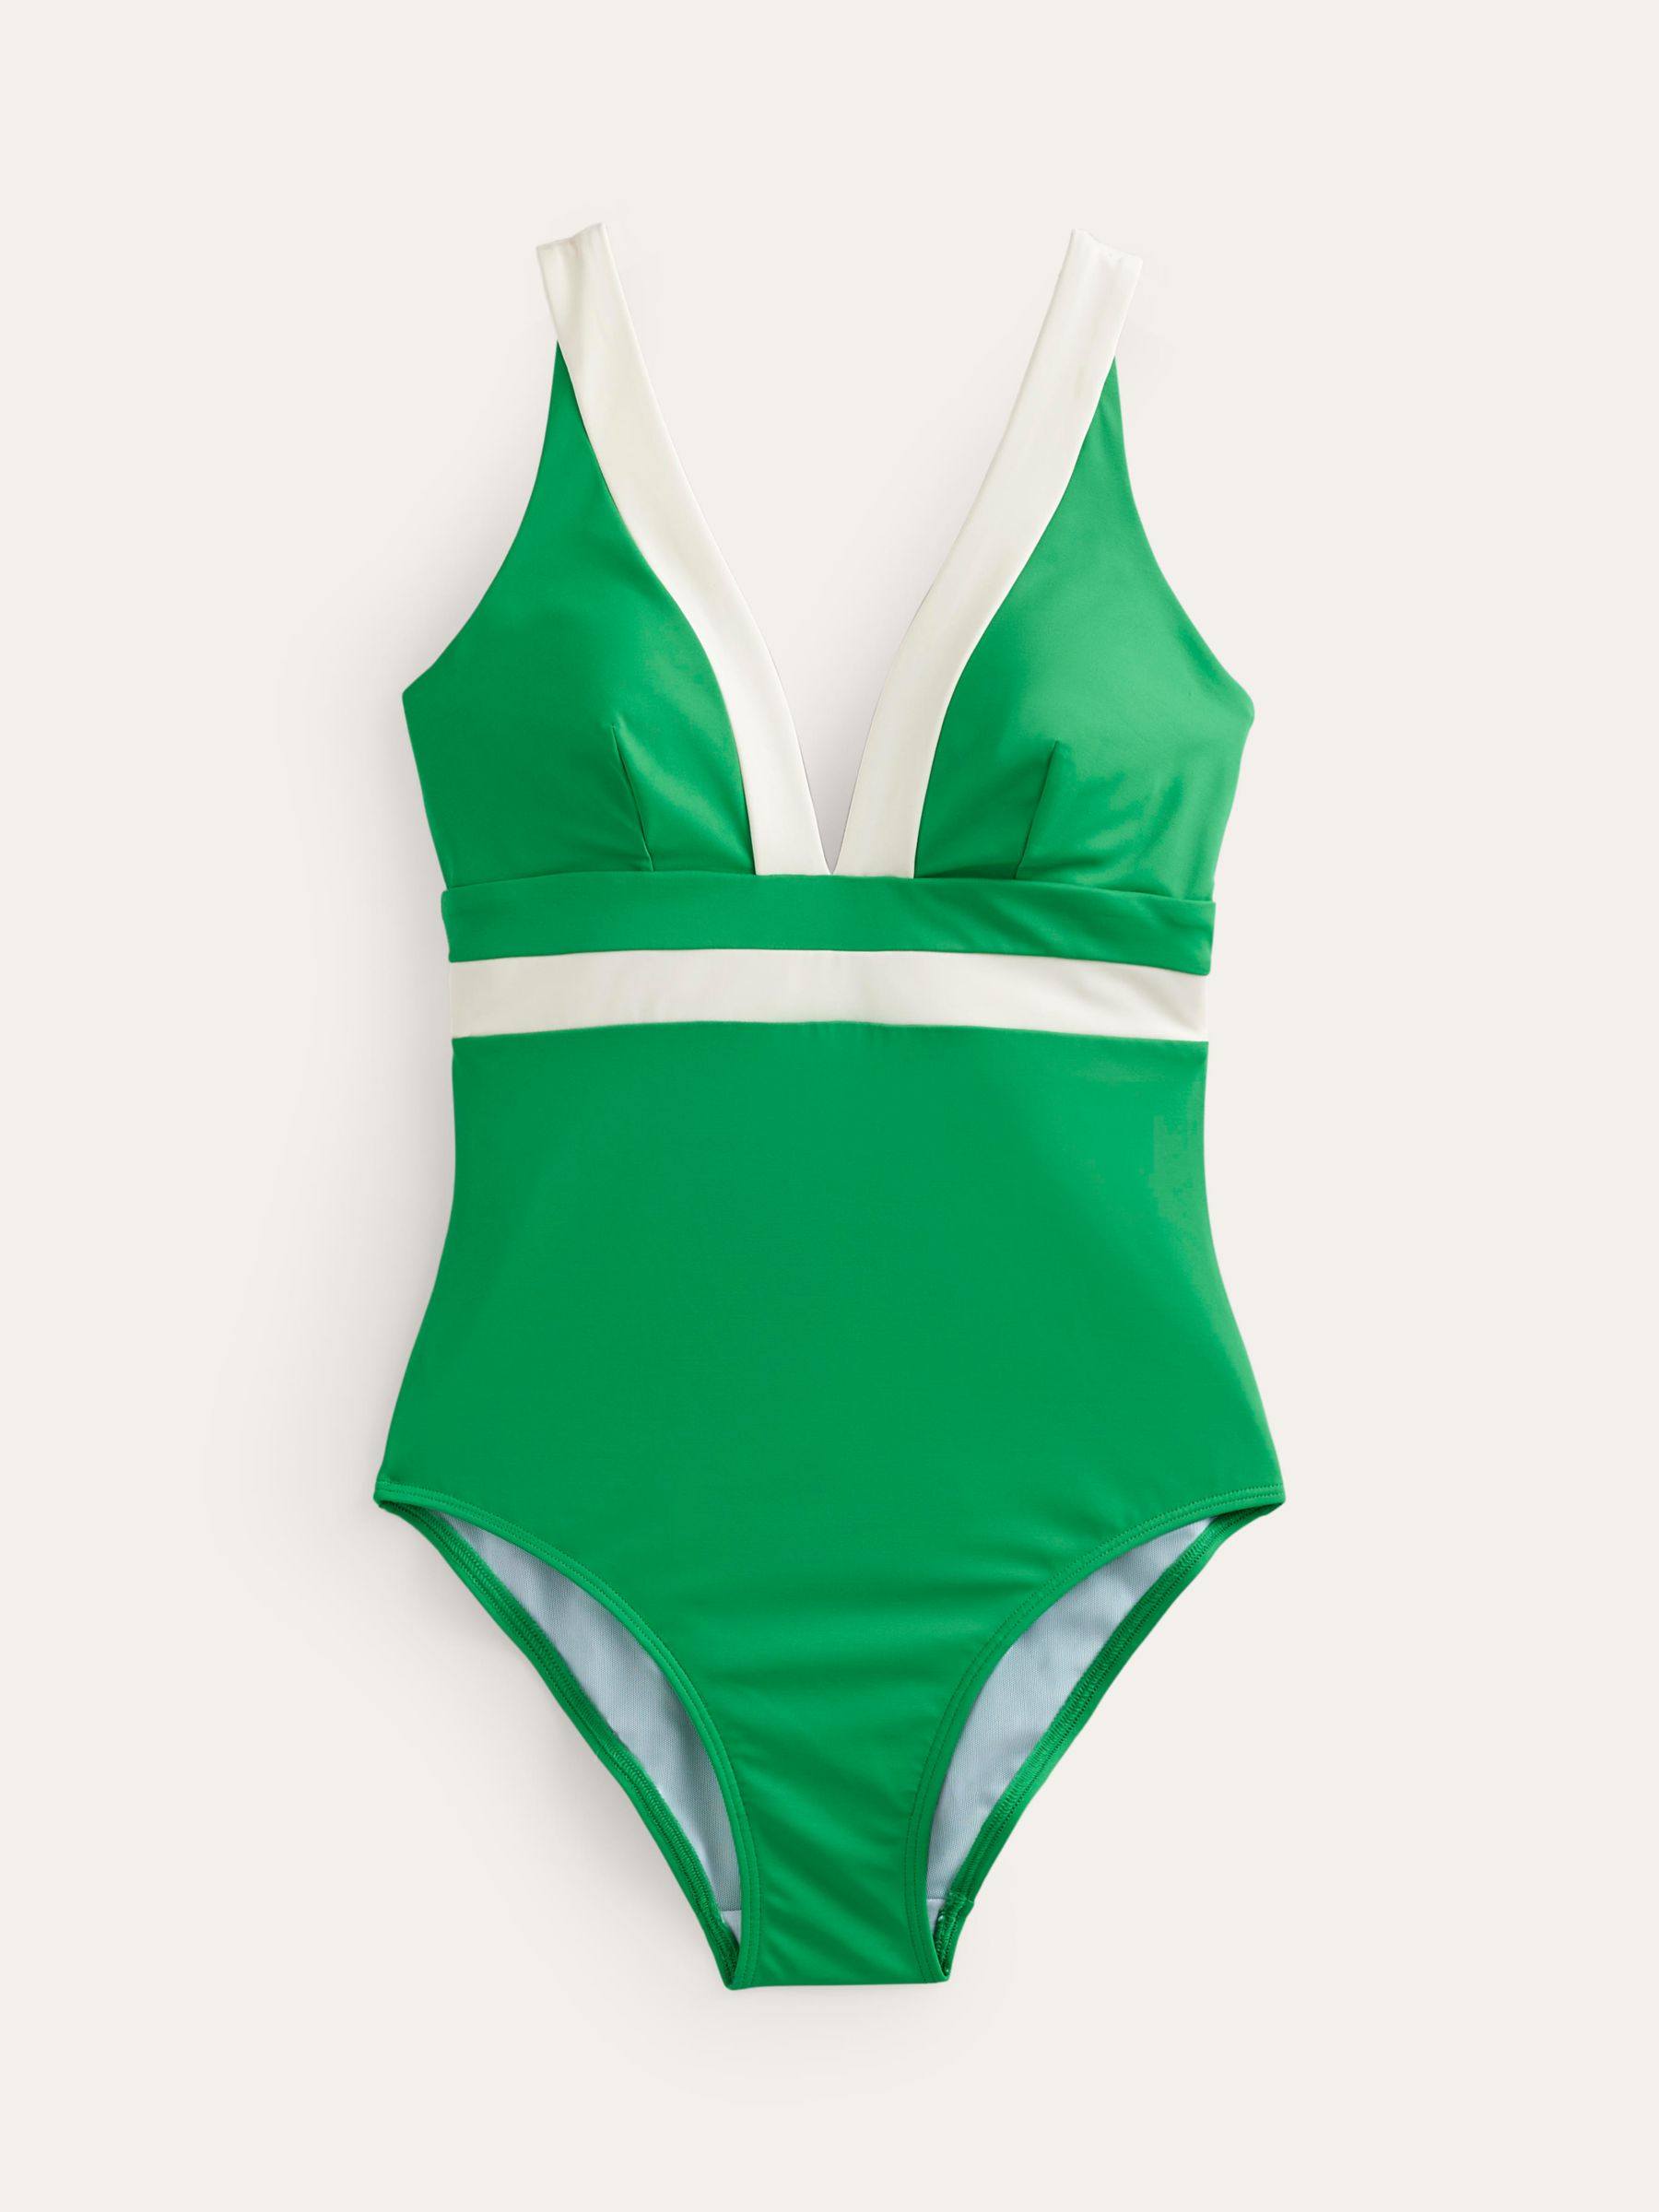 Boden Core Panel Halterneck Swimsuit, Bright Green/Ivory, 8